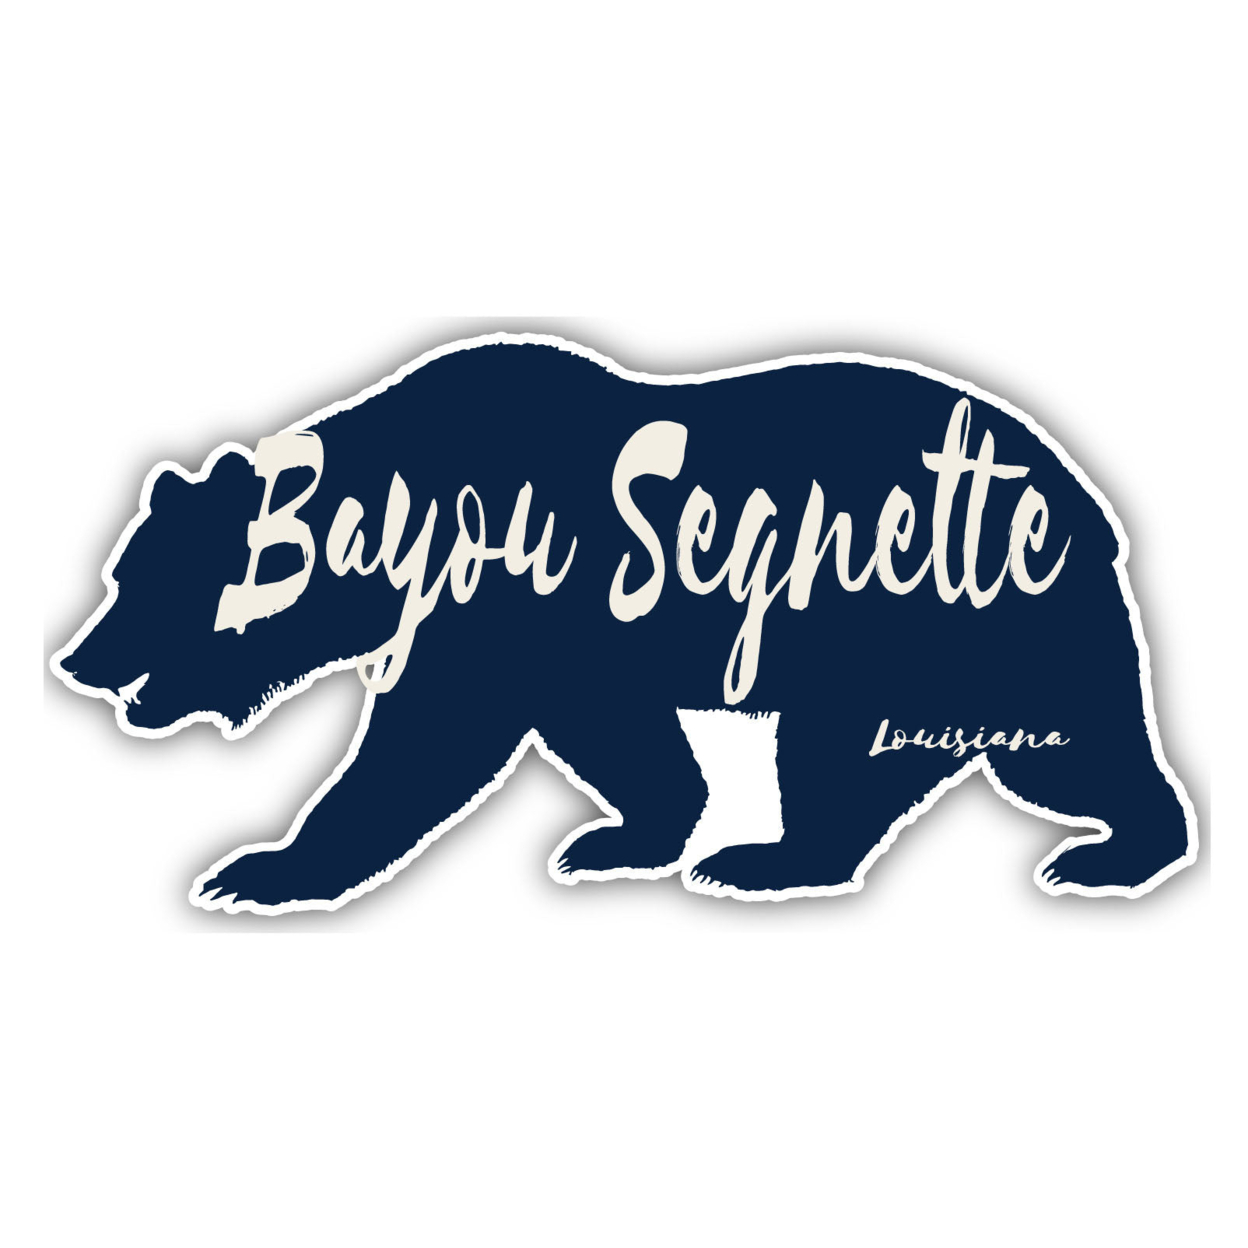 Bayou Segnette Louisiana Souvenir Decorative Stickers (Choose Theme And Size) - Single Unit, 8-Inch, Bear